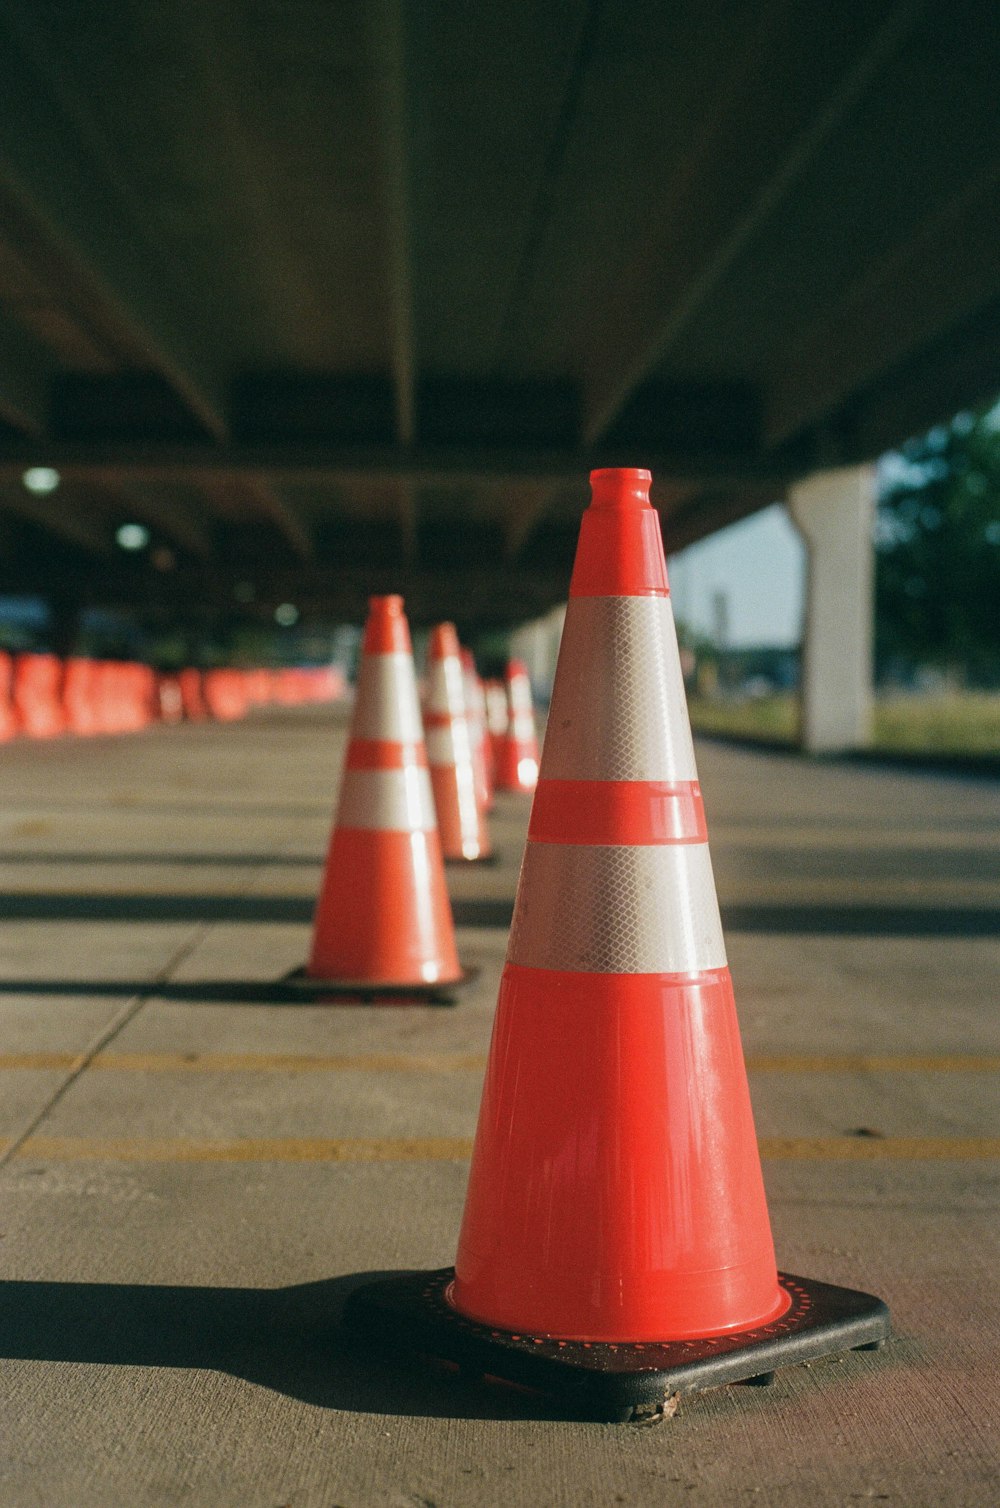 cone de tráfego laranja e branco no piso de concreto cinza